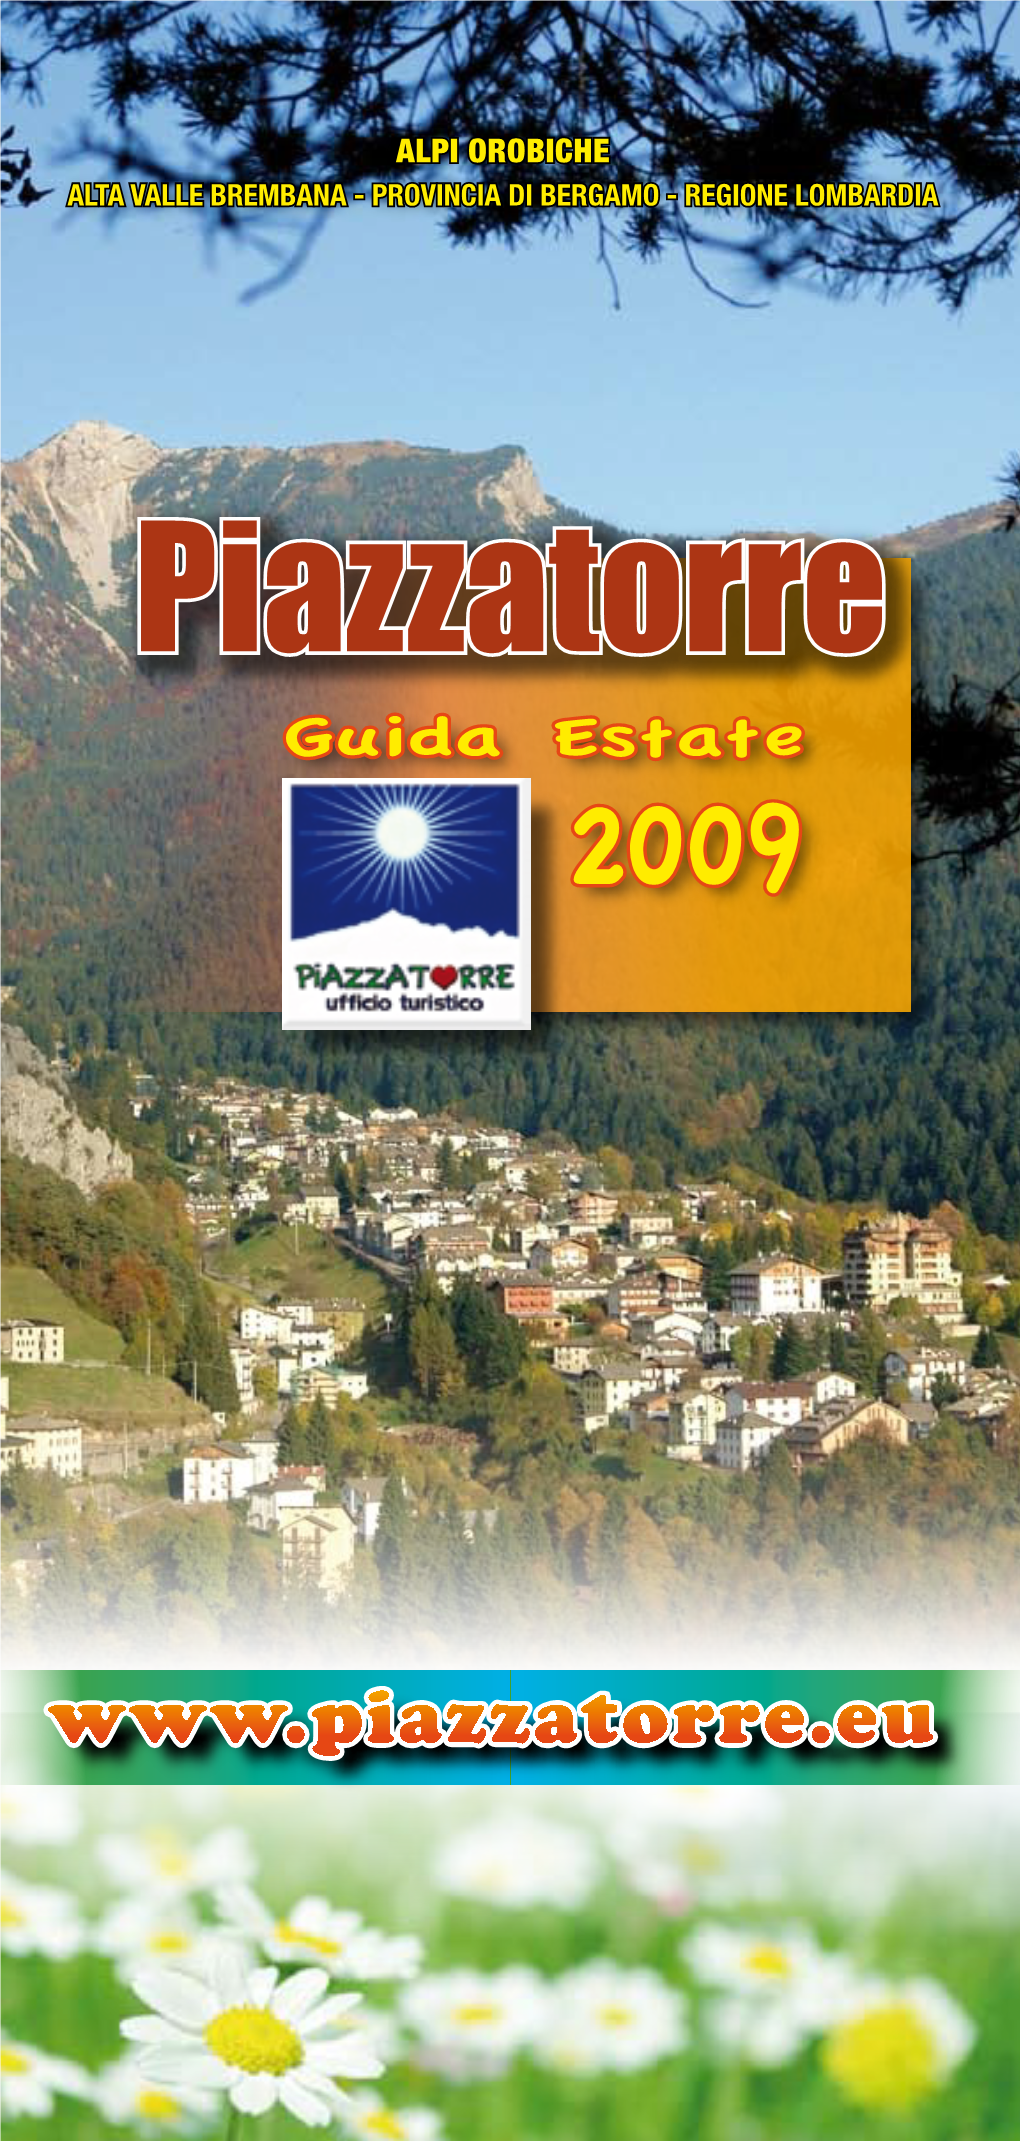 Piazzatorre Guida Estate 2009